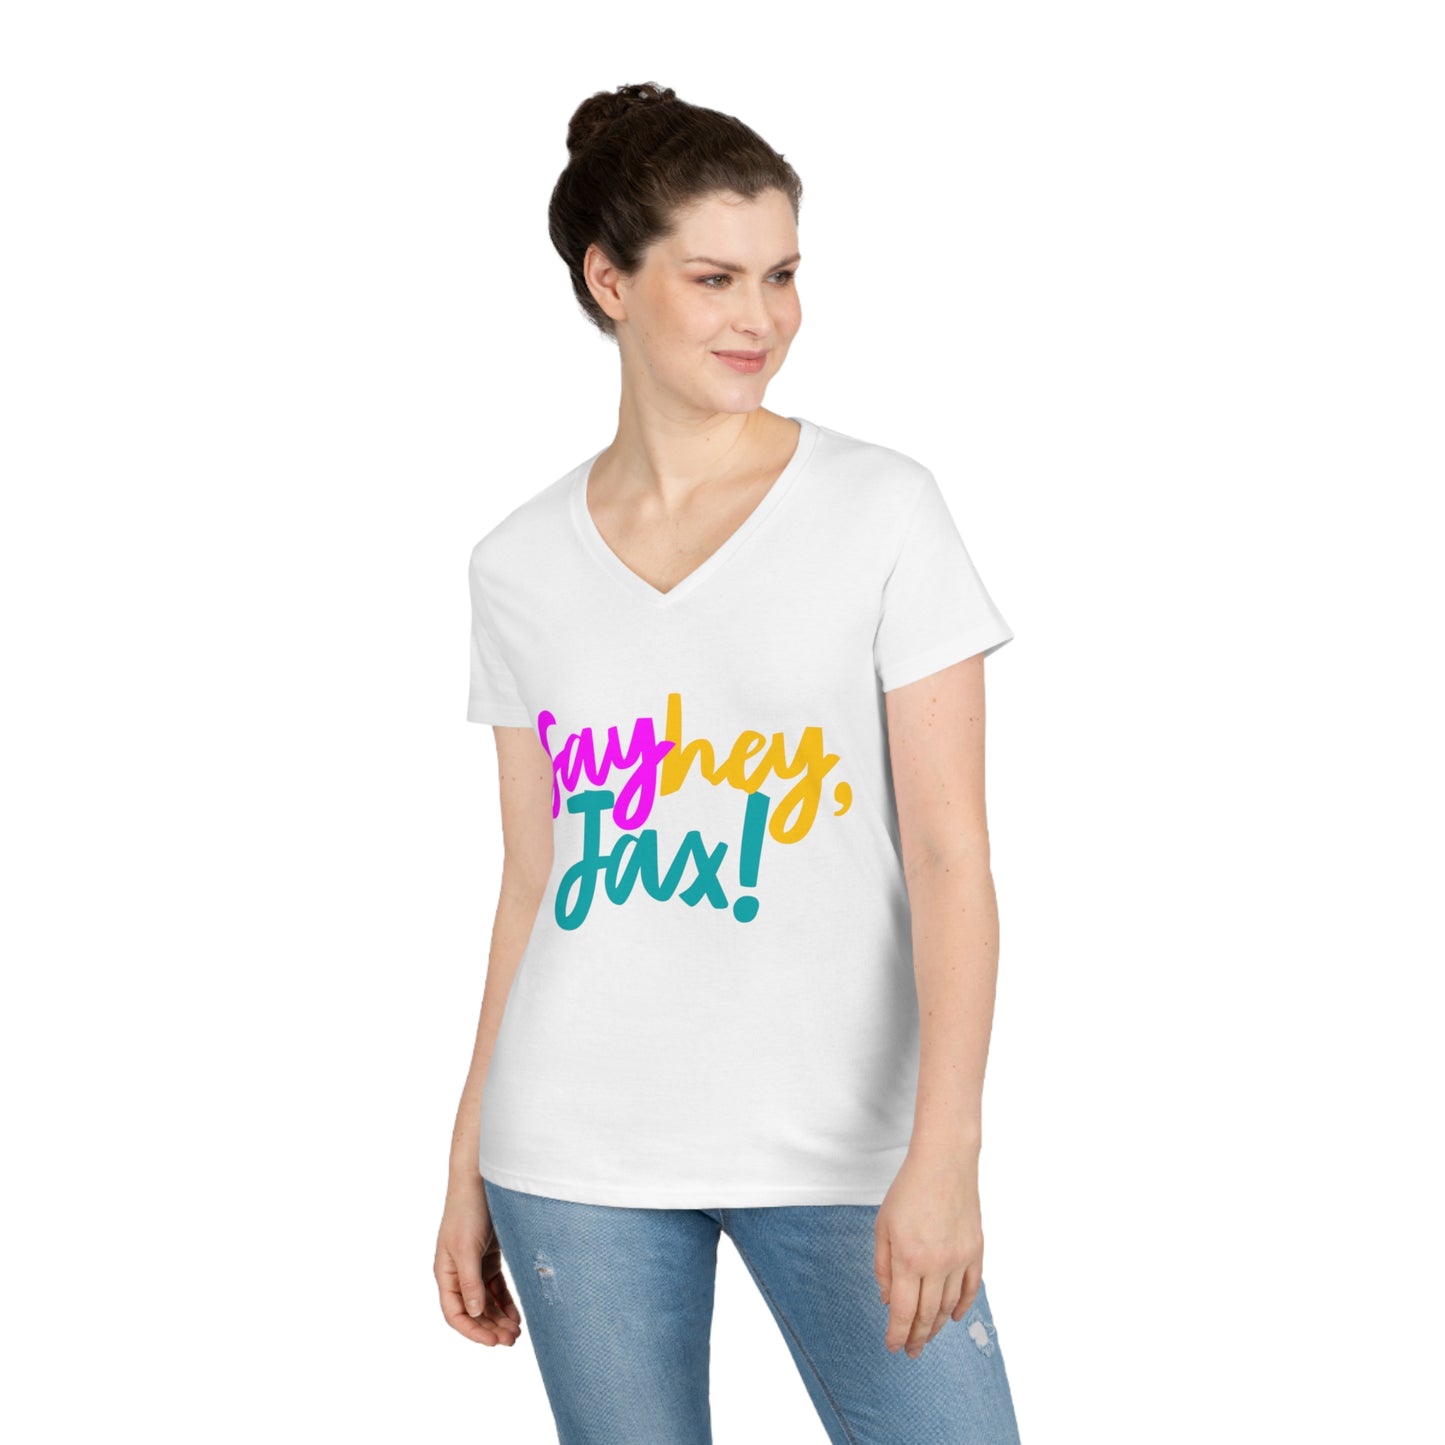 Say Hey Jax! Ladies' V-Neck T-Shirt